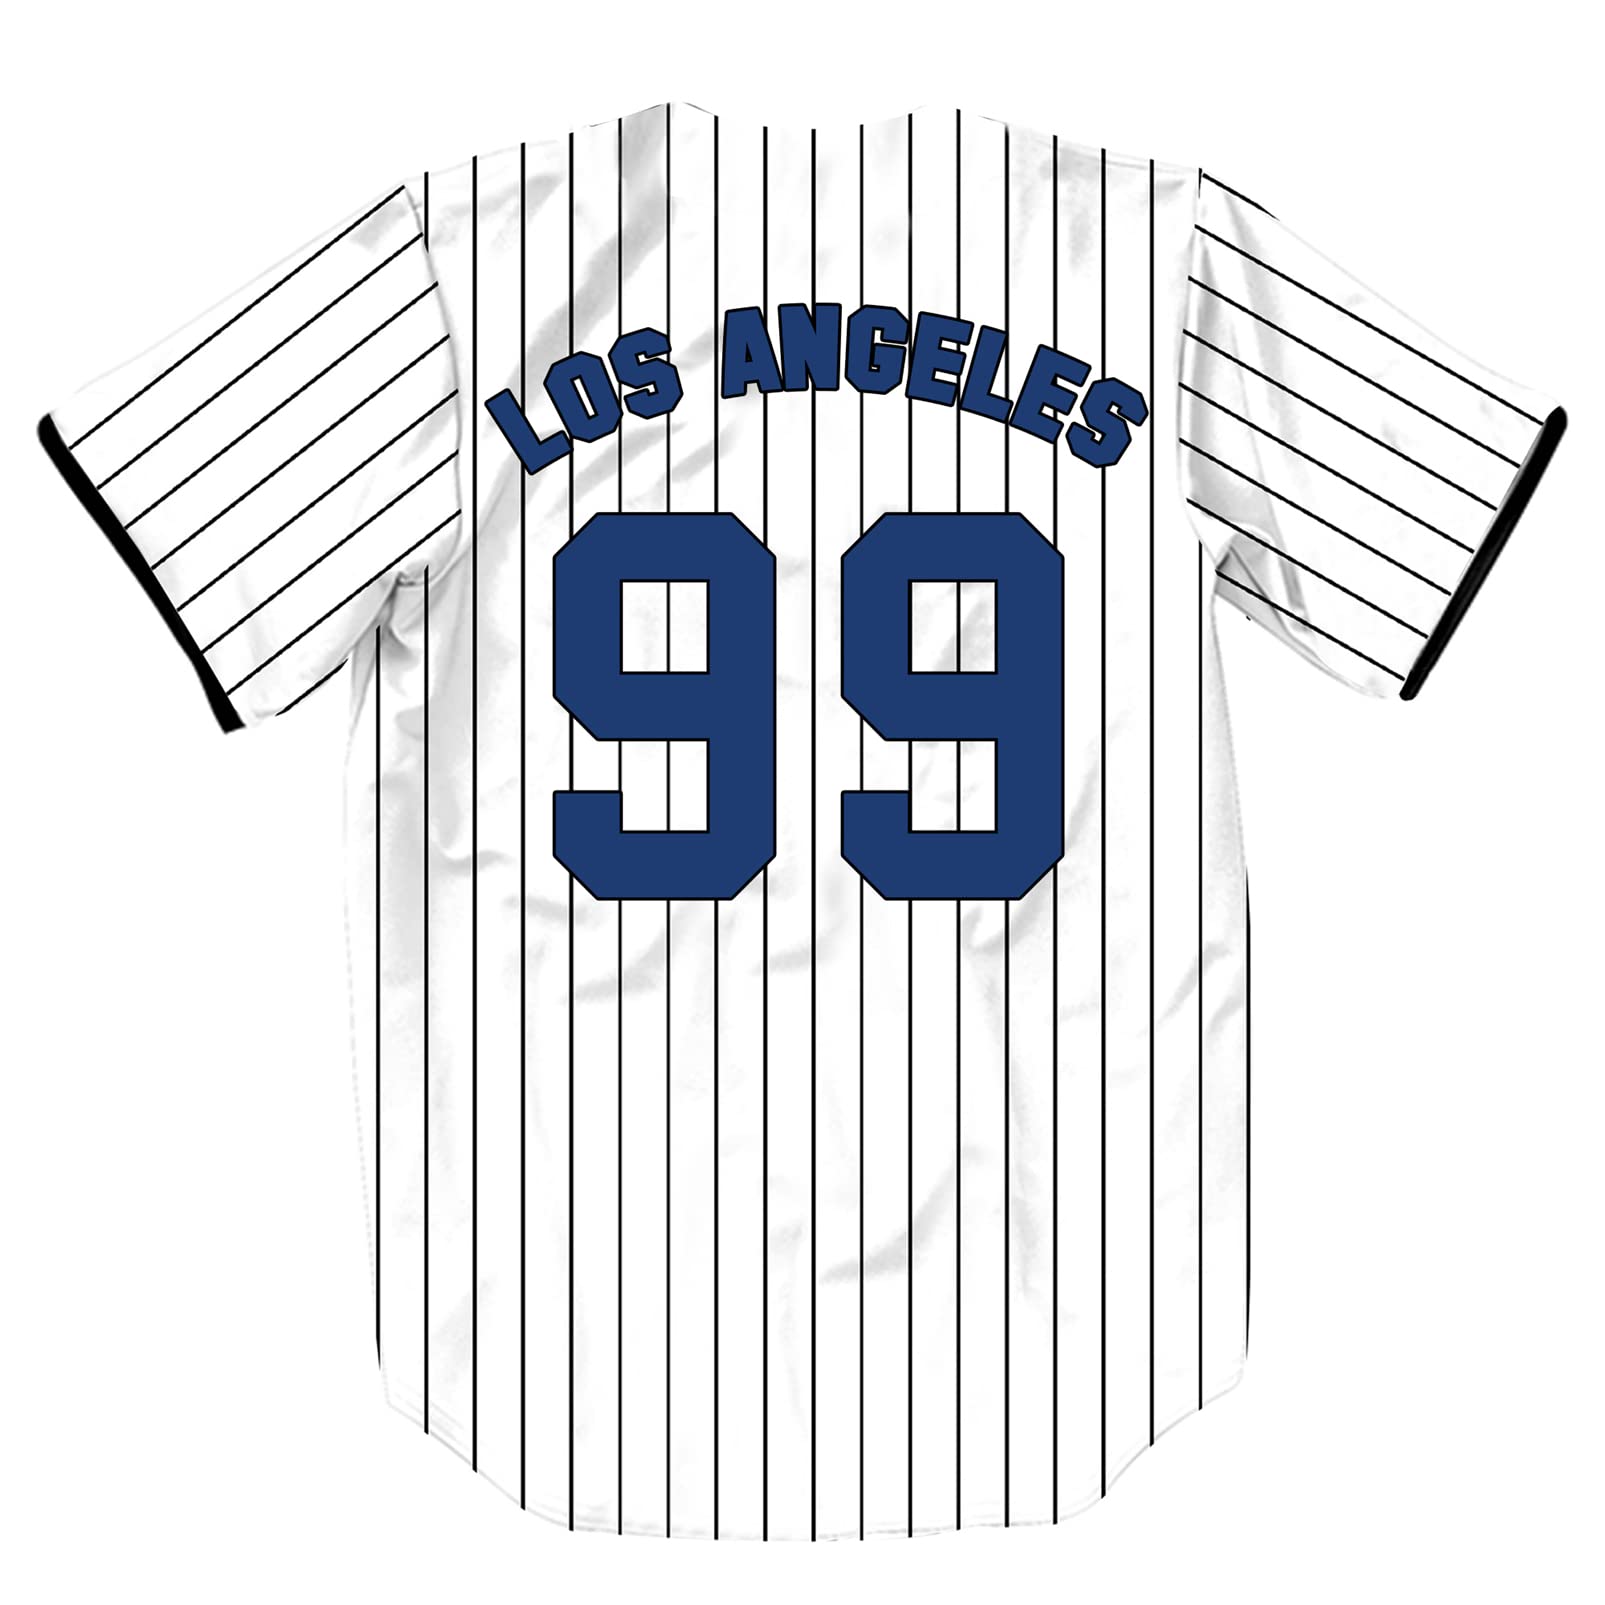 TIFIYA Los Angeles 99/23/24 Stripes Baseball Jersey La Baseball Team Shirts for Men/Women/Young